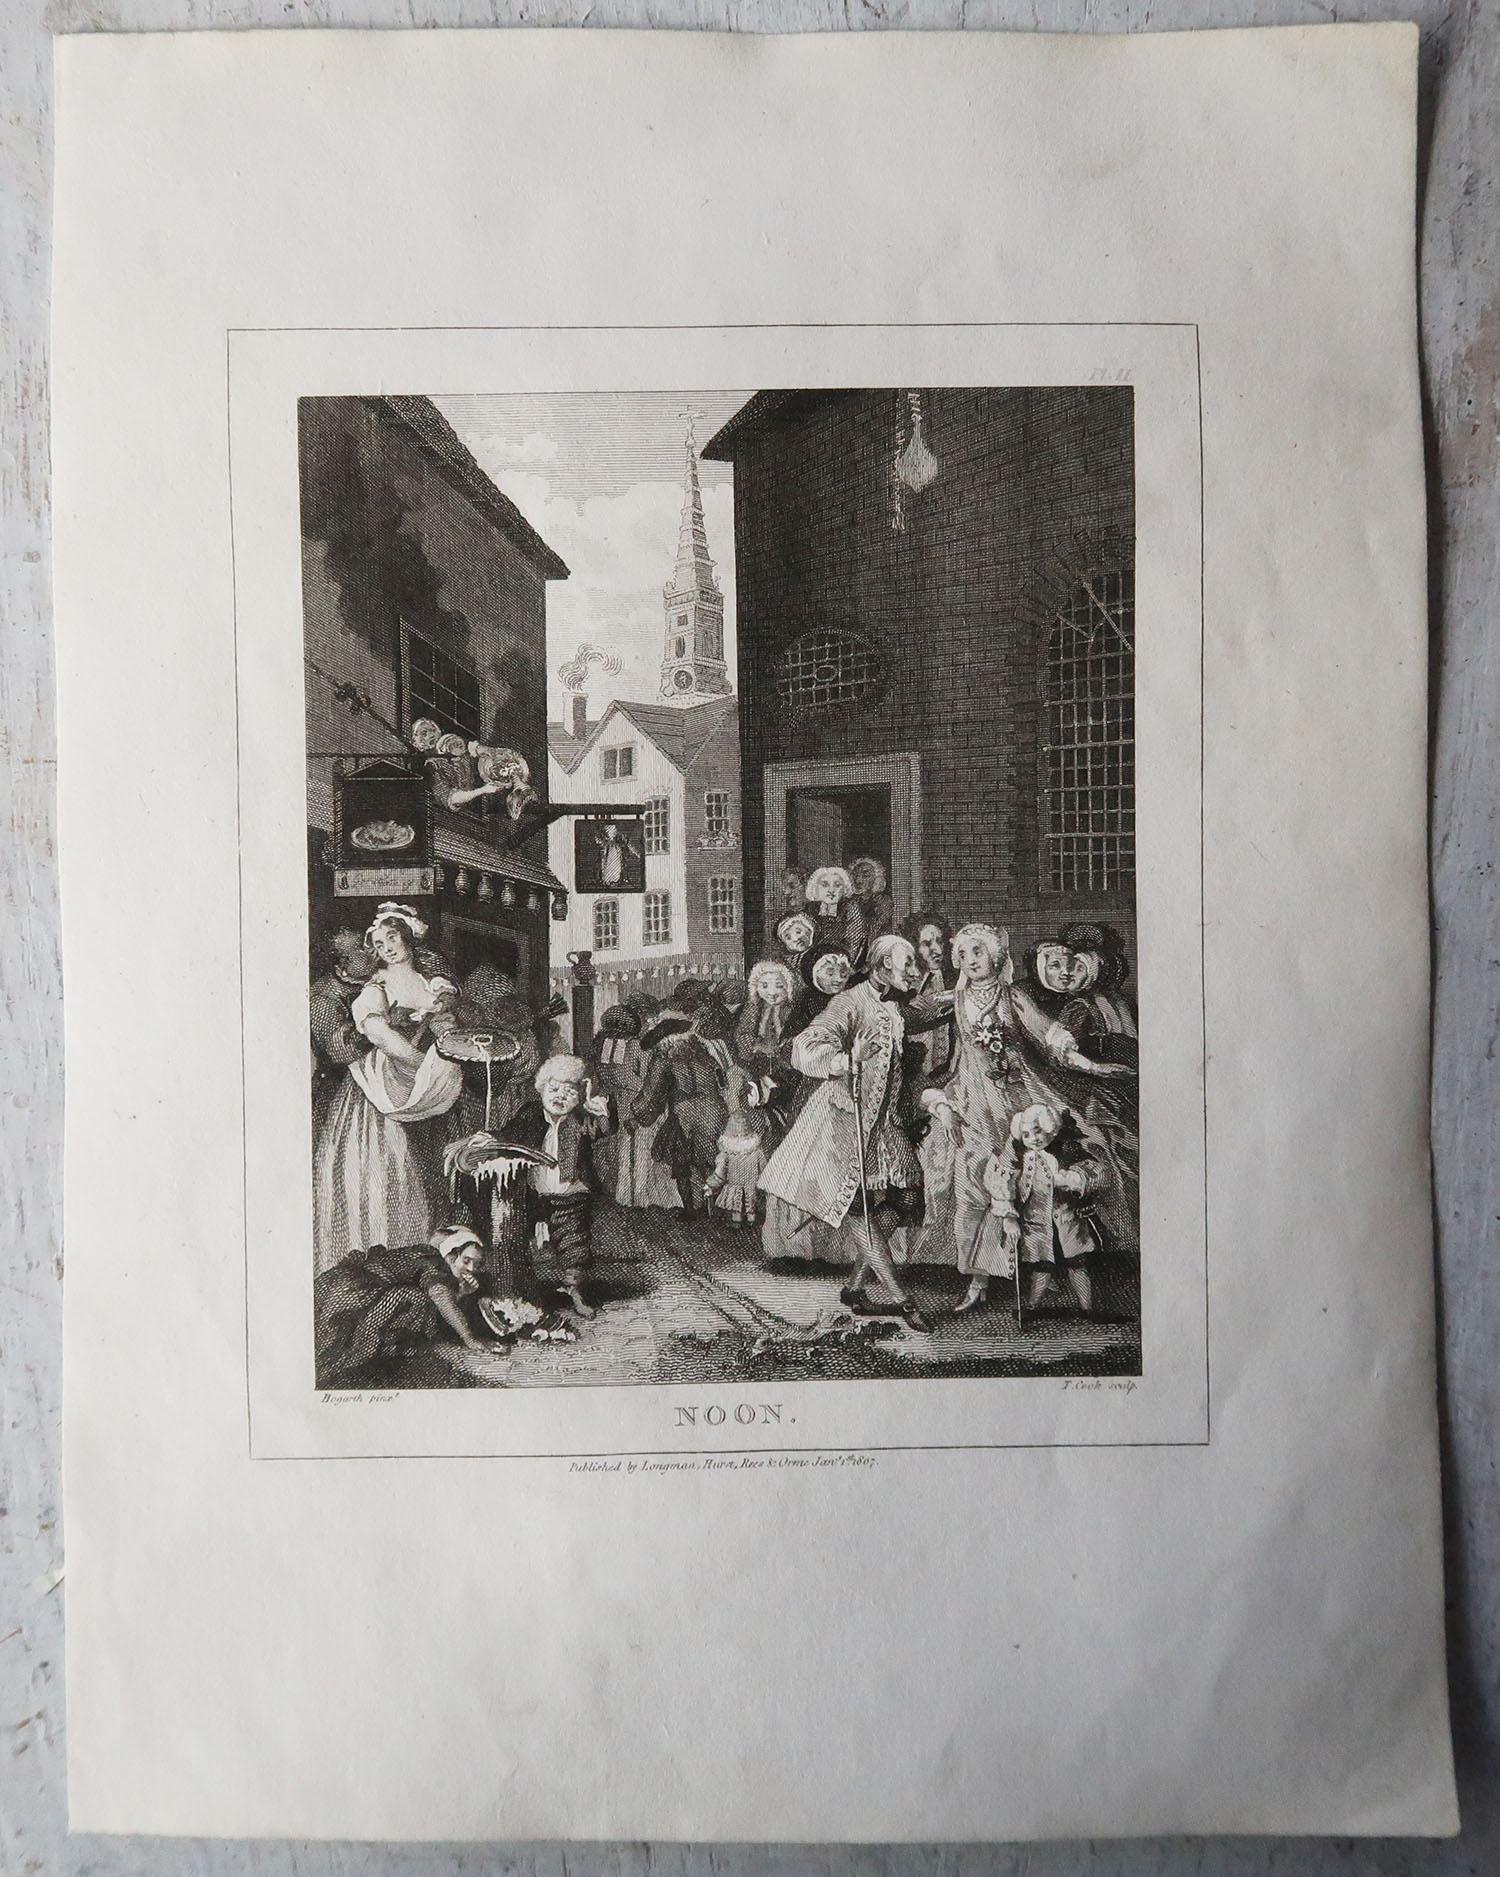 Other Set of 4 Original Antique Prints After William Hogarth, Dated 1807